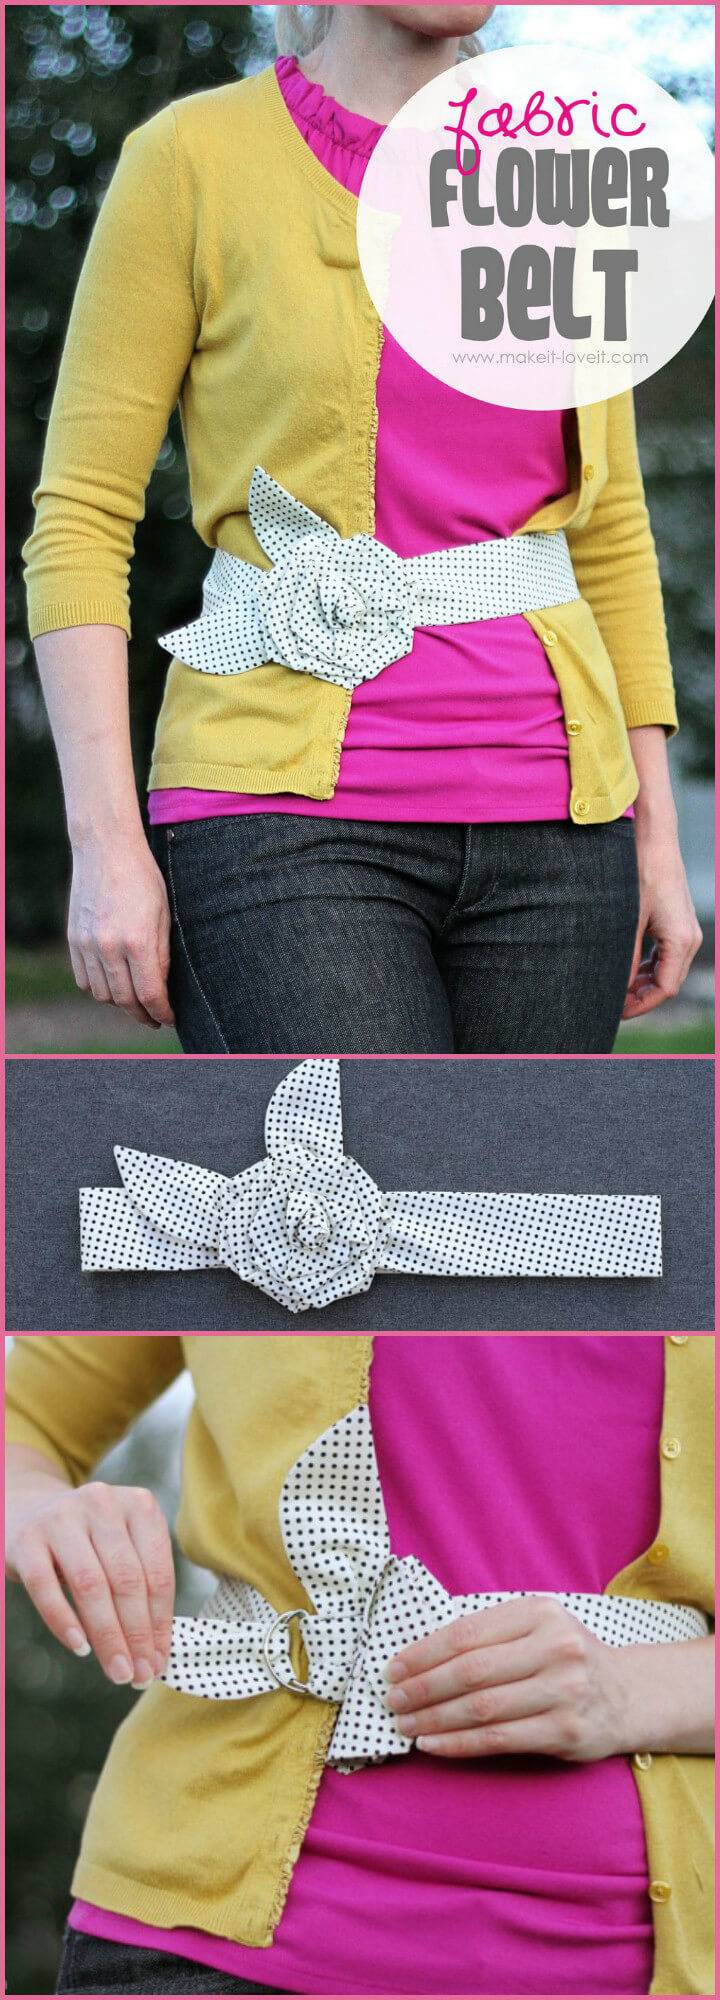 beautiful fabric flower belt tutorial